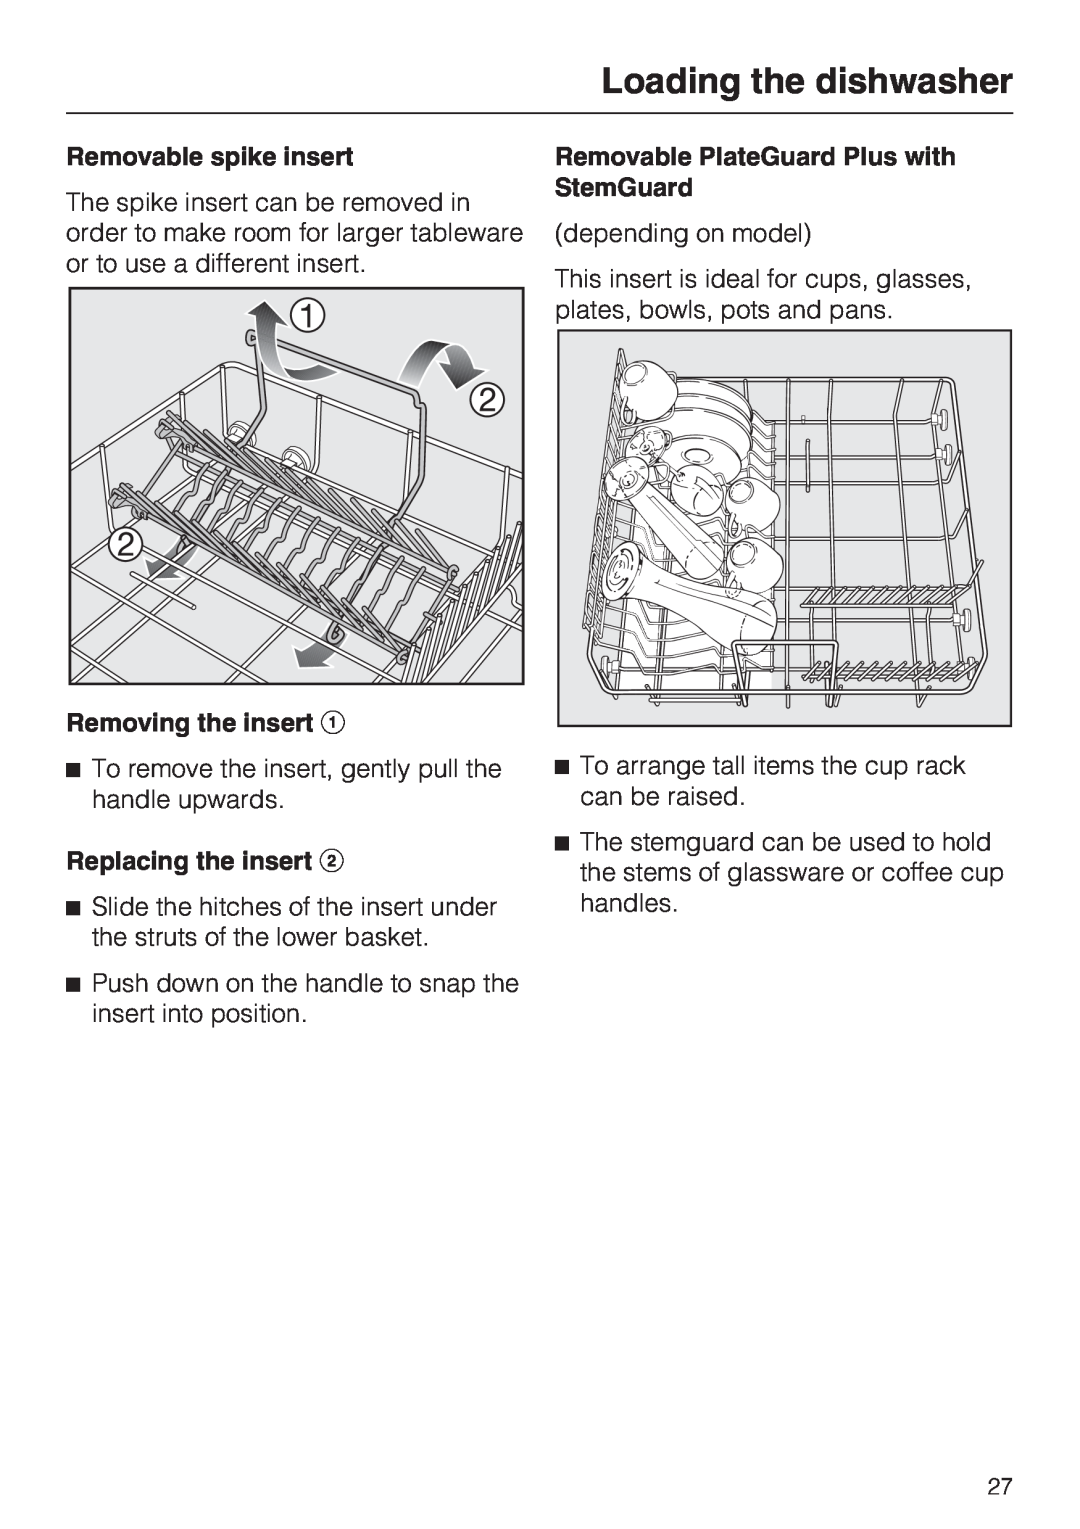 Miele G 2832 manual Loading the dishwasher, Removable spike insert, Removing the insert, Replacing the insert 